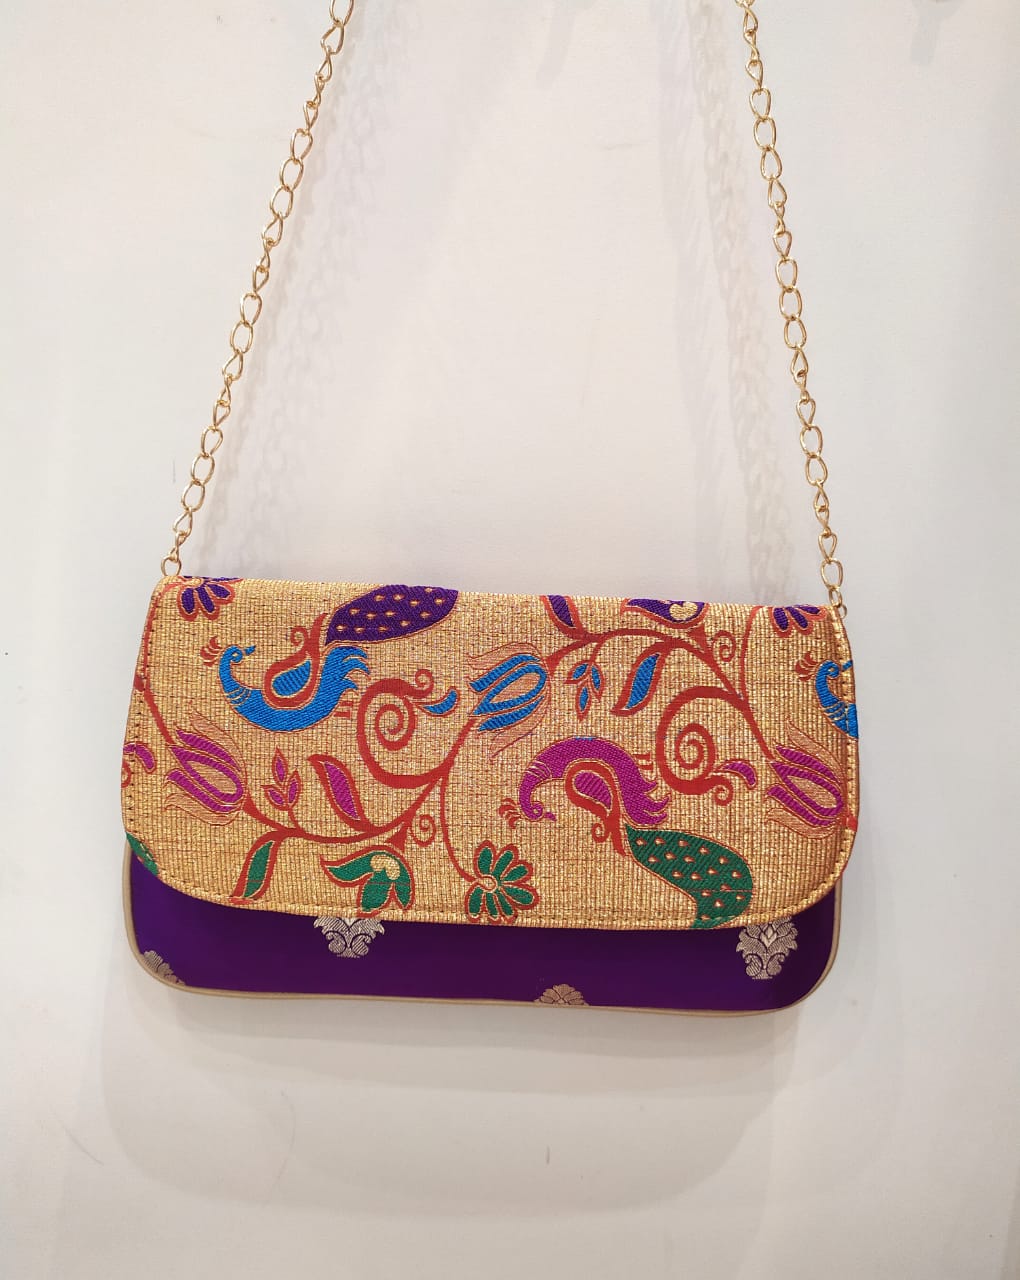 Buy Paithani Woman's Fashionable & Stylish handbag for Women handcarry purse  (Black) at Amazon.in